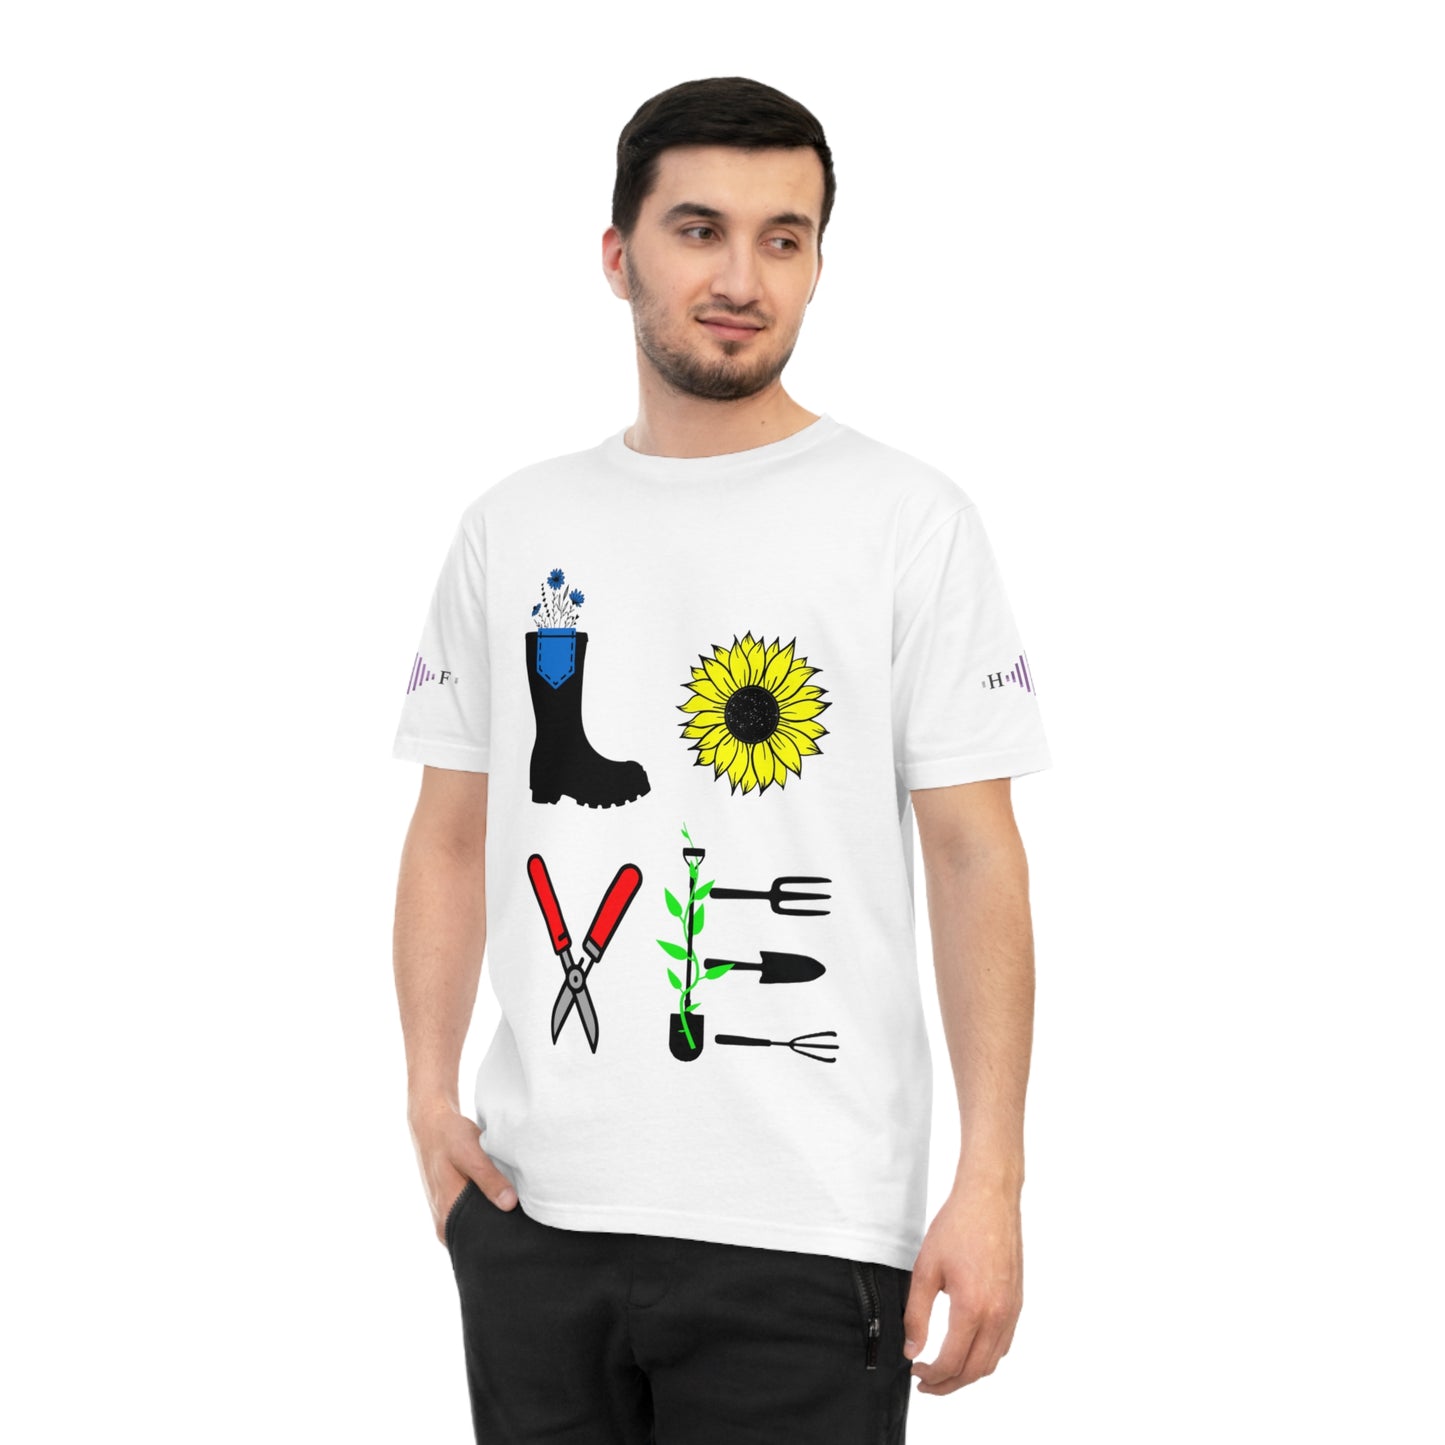 BIO Garden Love - T-shirt unisexe en jersey classique